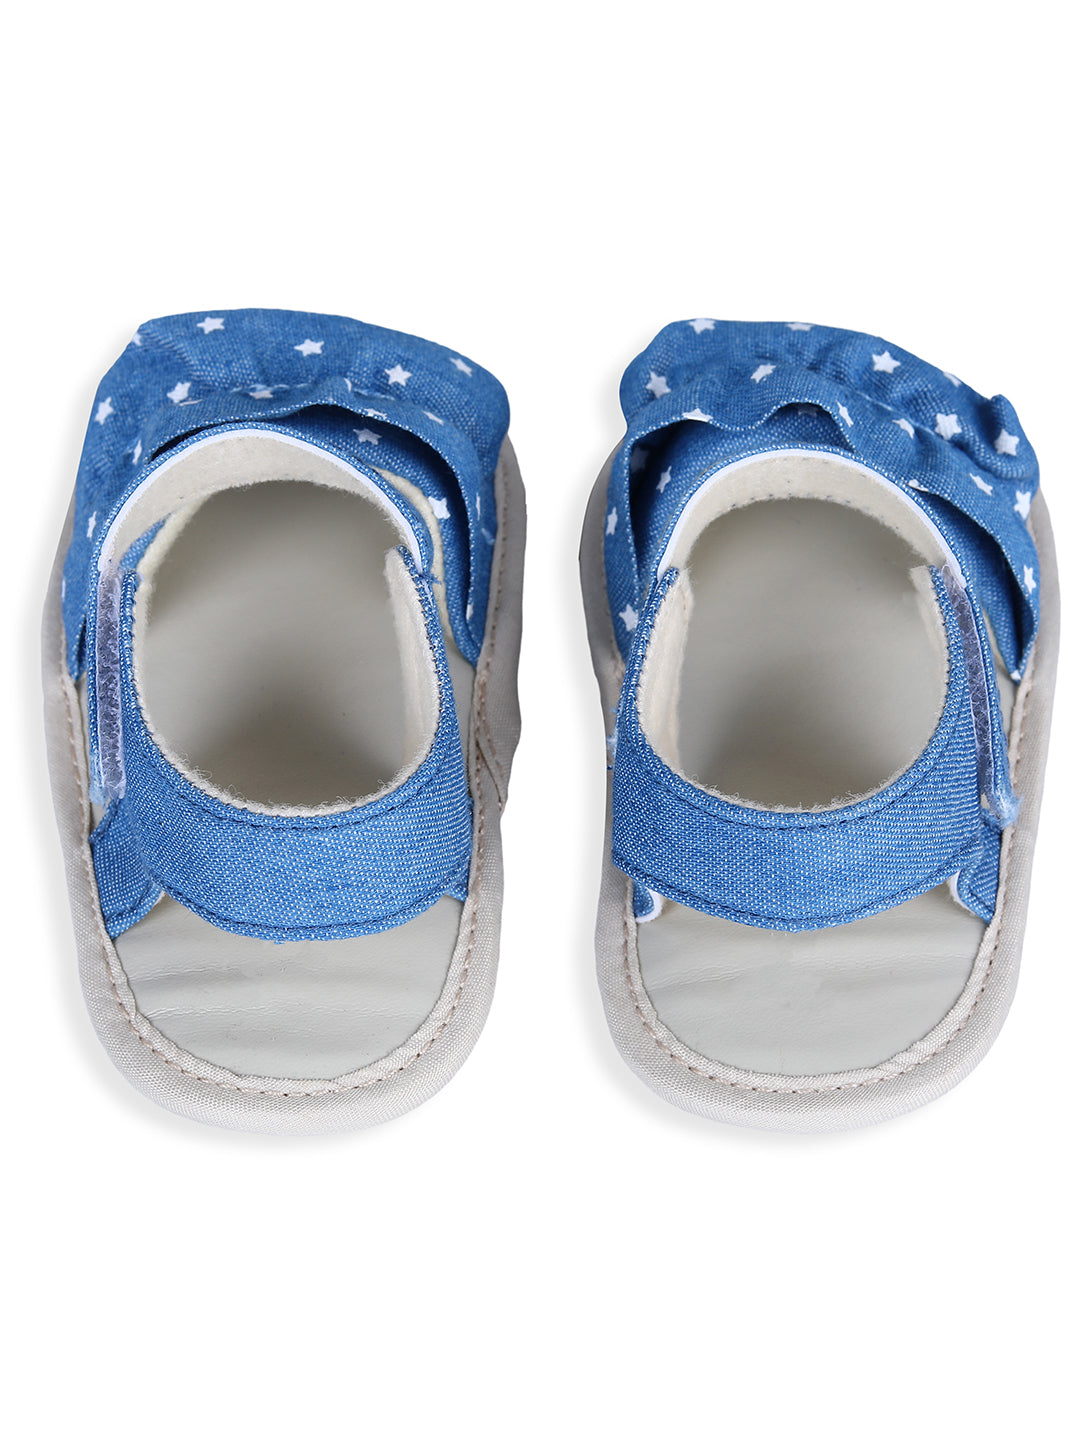 Baby Moo Ruffle Star Premium Infant Girls Anti-Slip Sandal Booties - Blue